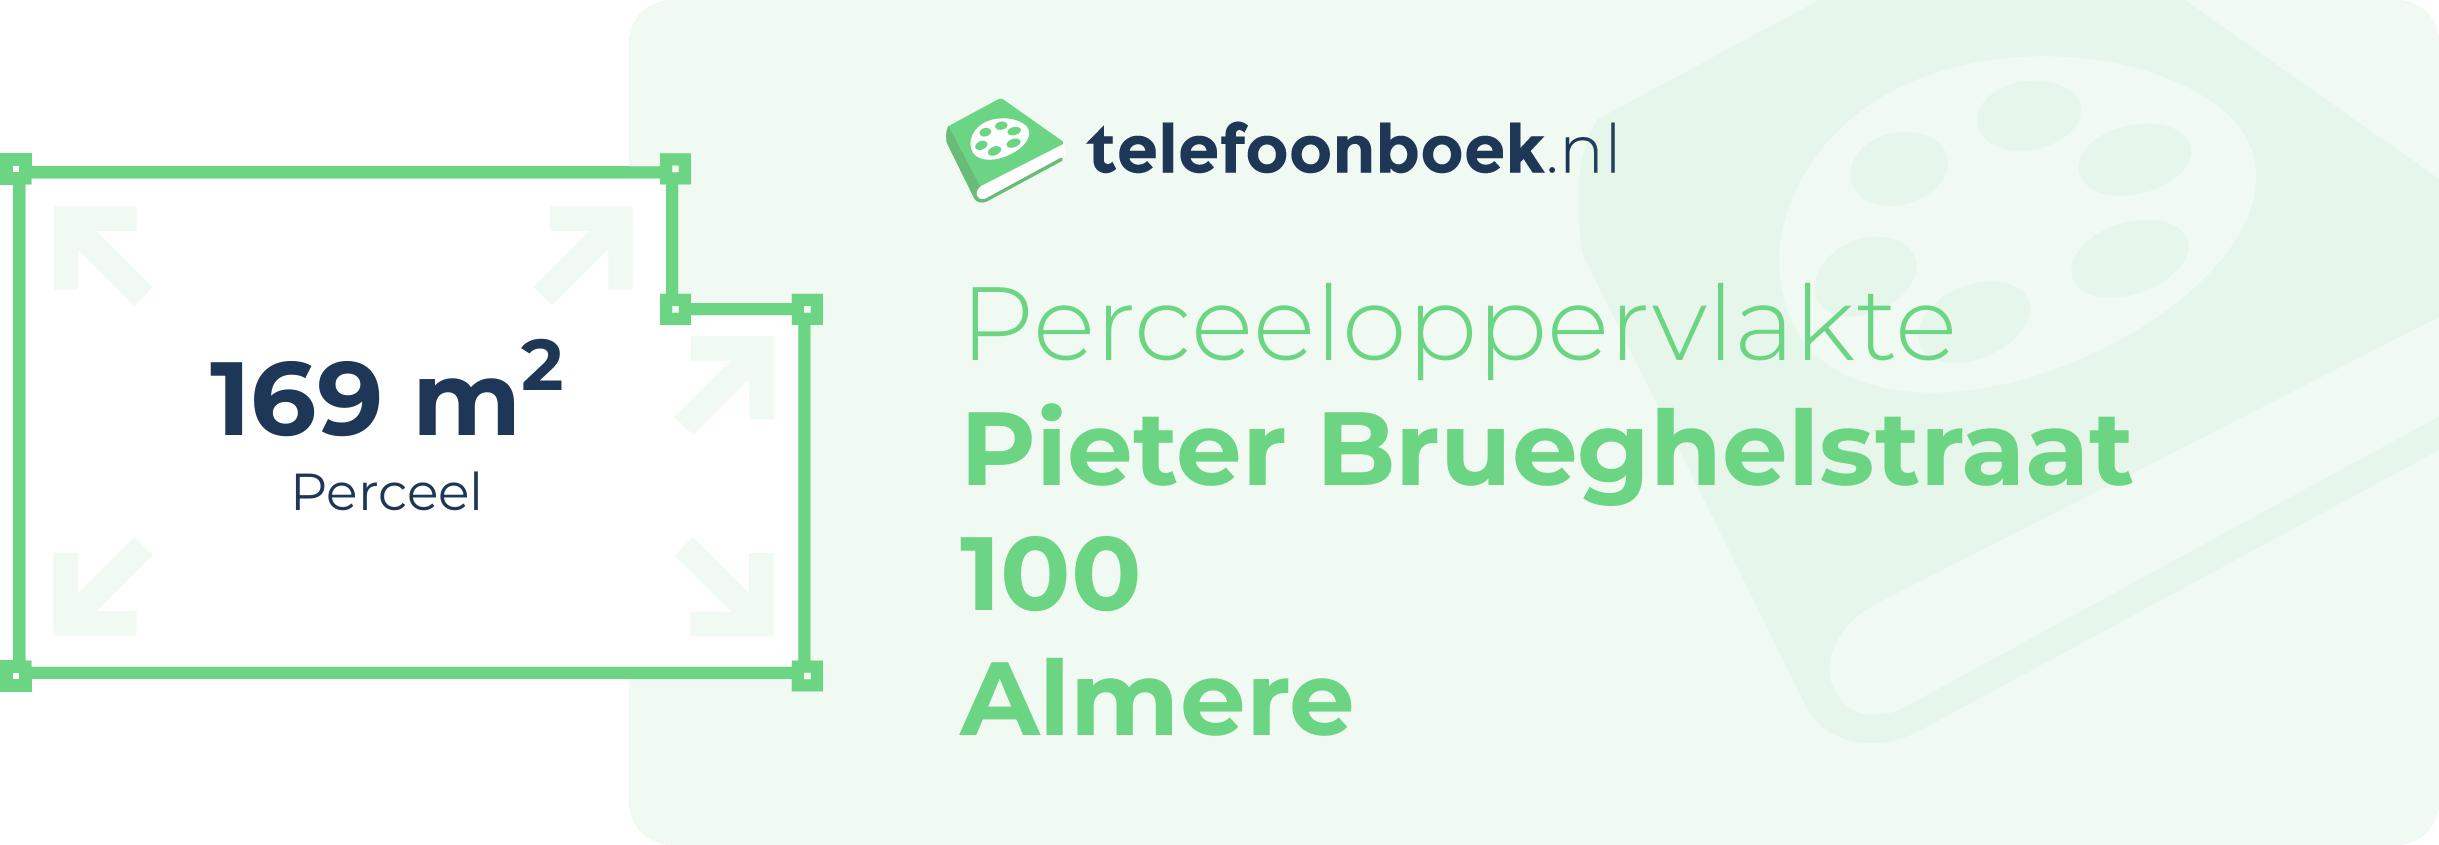 Perceeloppervlakte Pieter Brueghelstraat 100 Almere